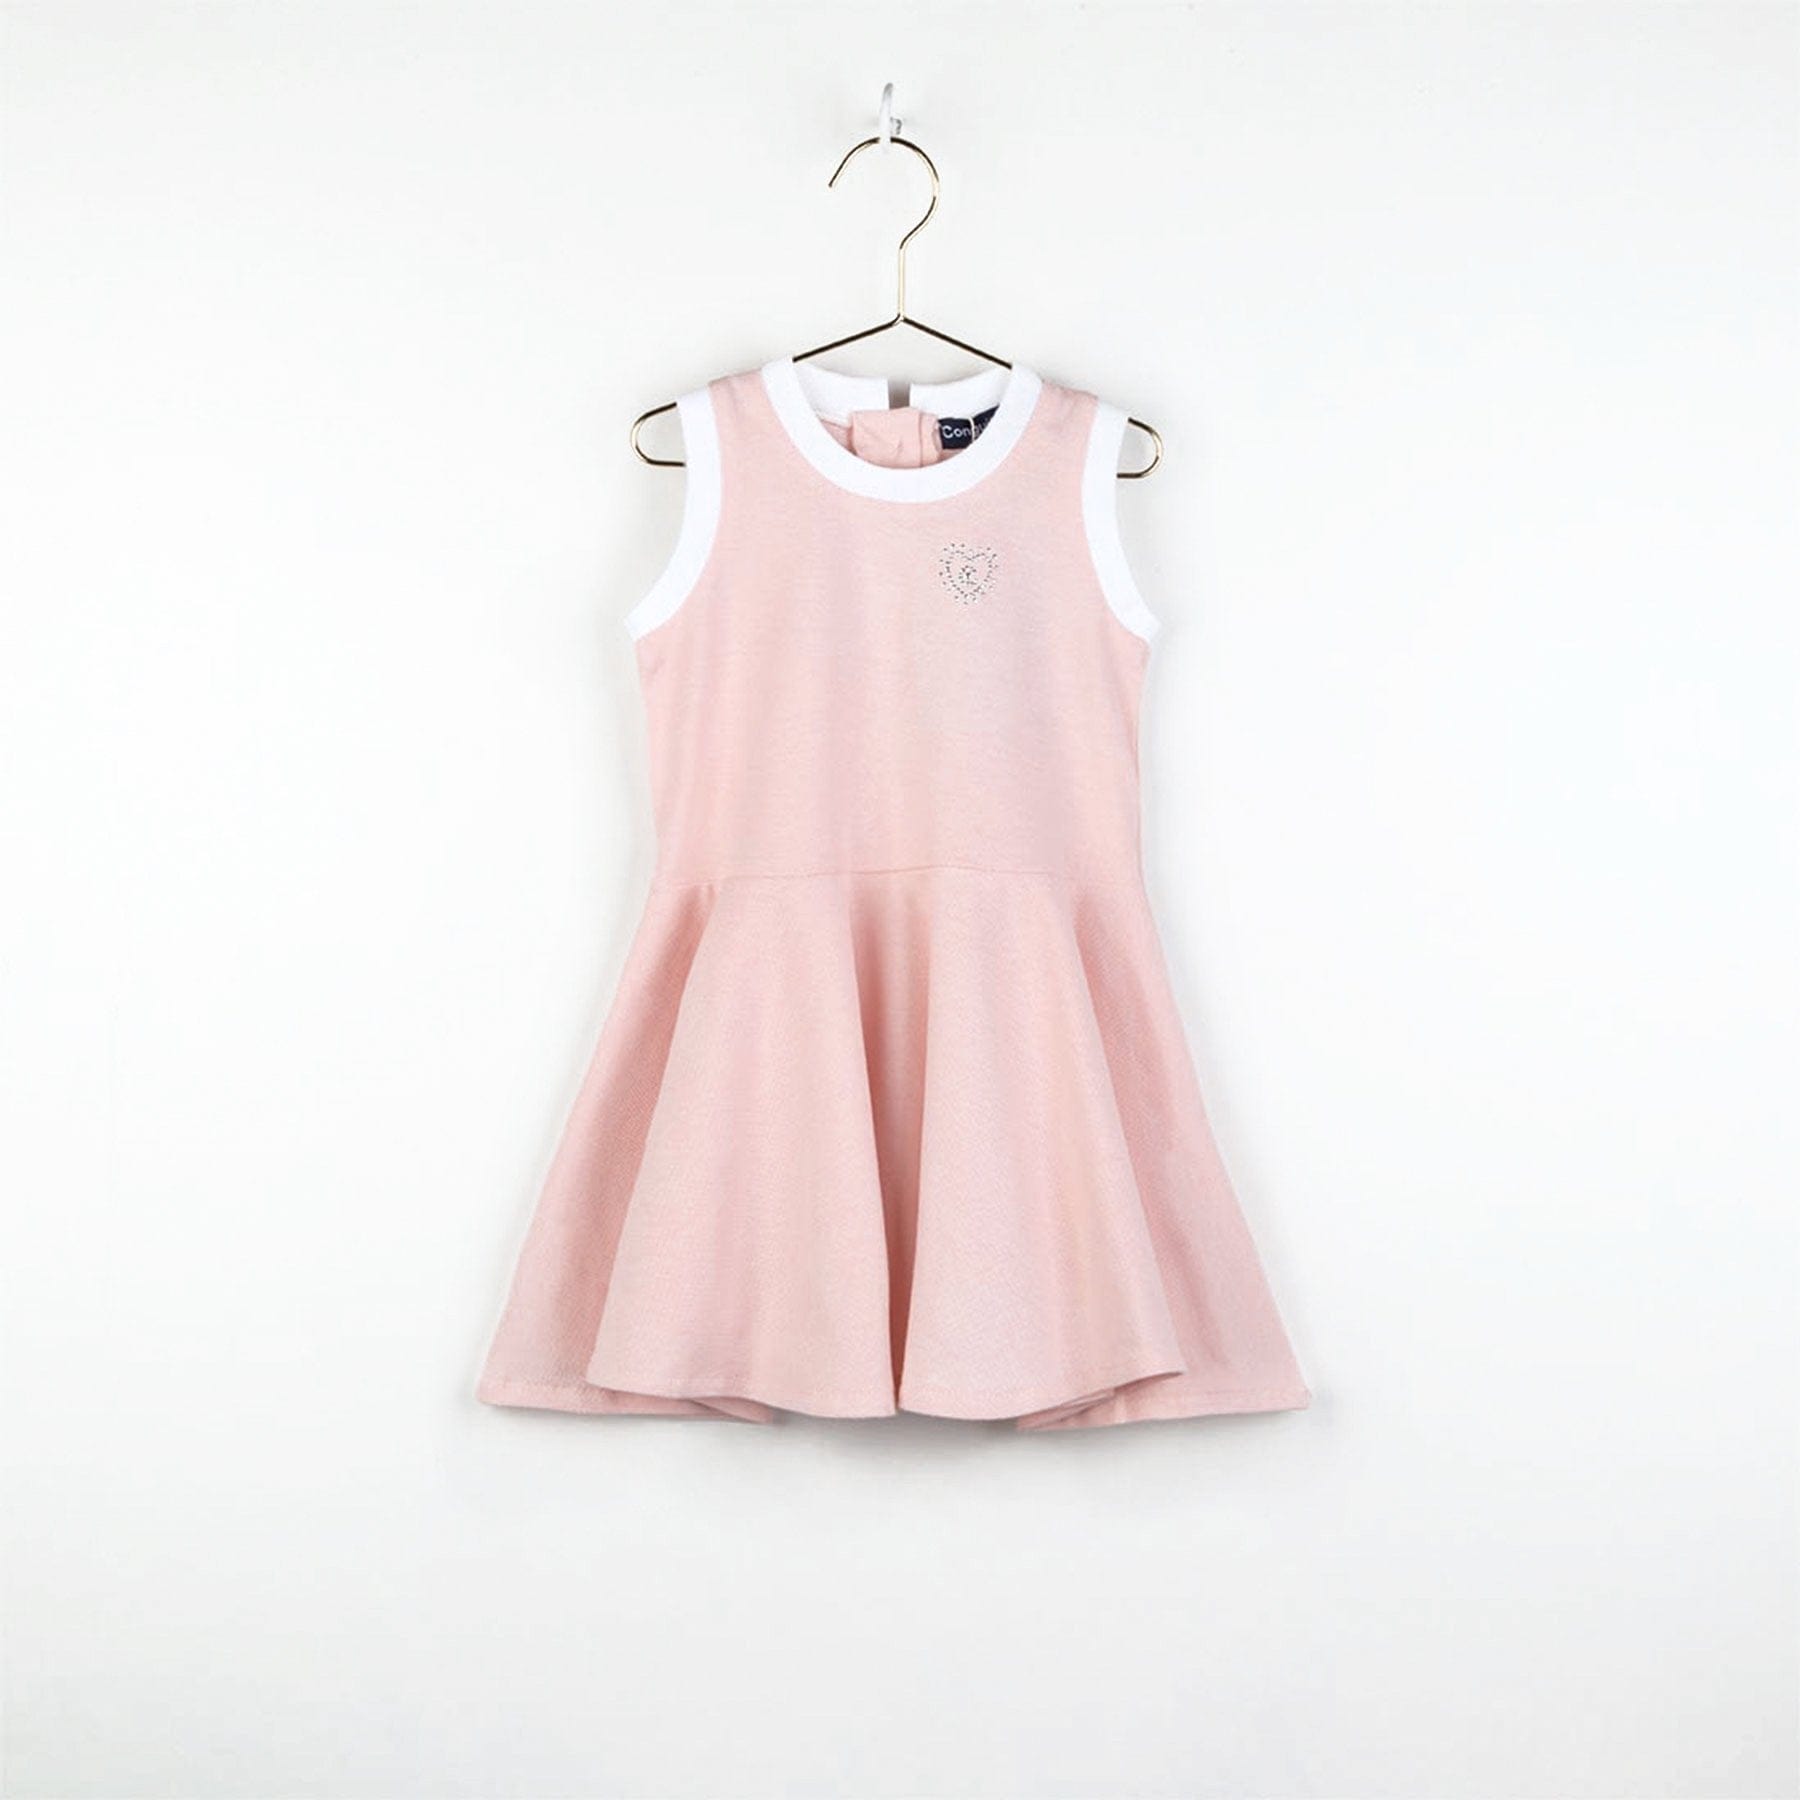 CONGUITOS TEXTIL Clothing Girl's Pink Skater Dress